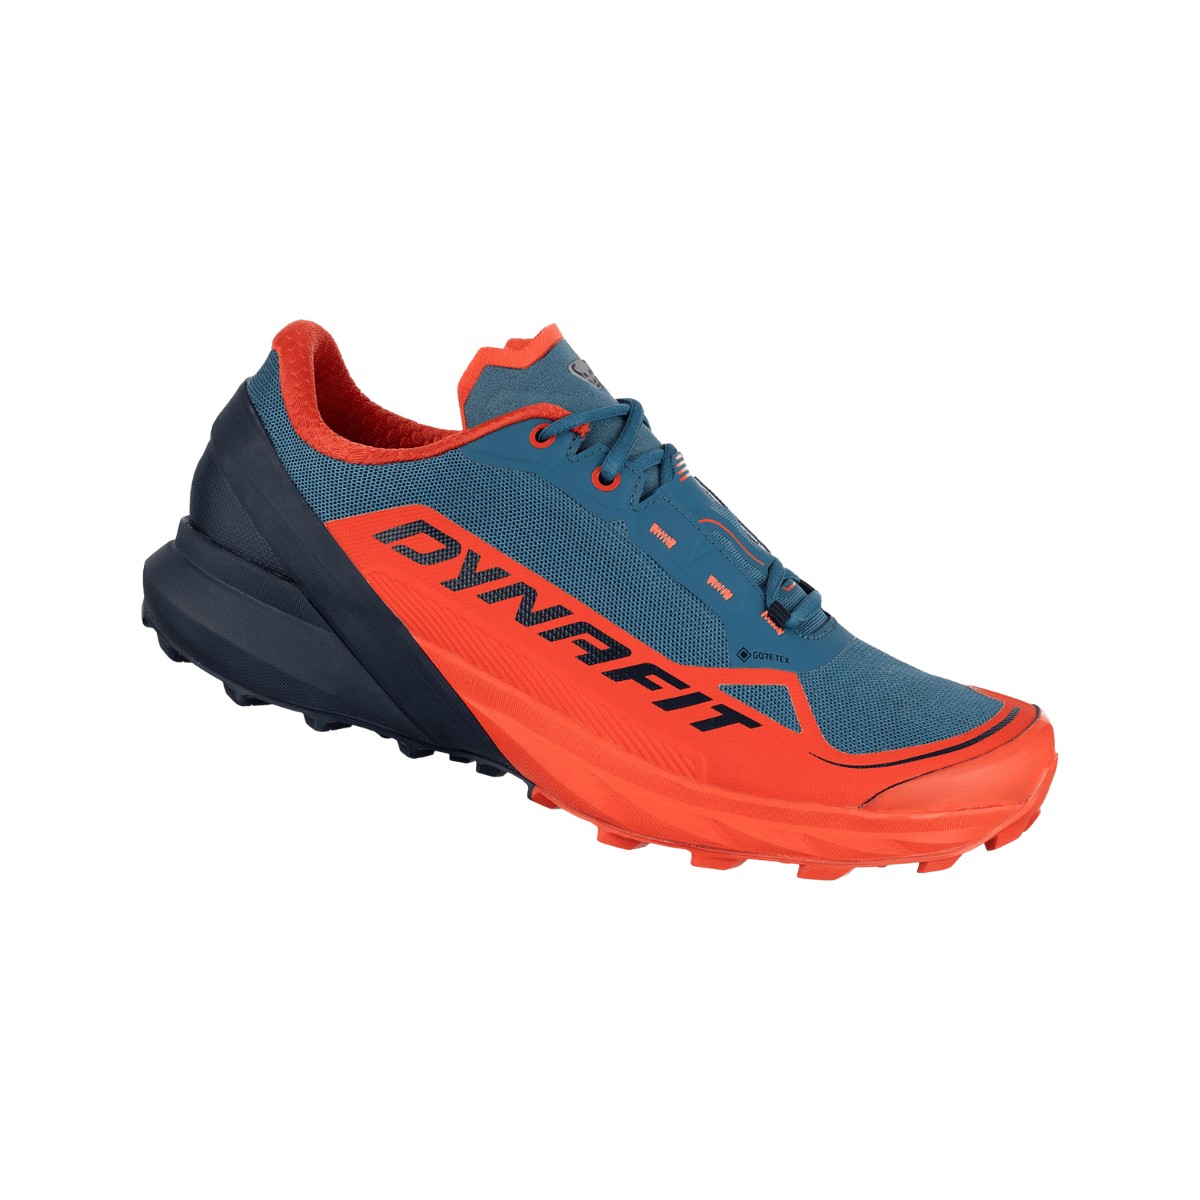 Schuhe Dynafit Ultra 50 GTX Blau Rot AW22, Größe 42 - EUR